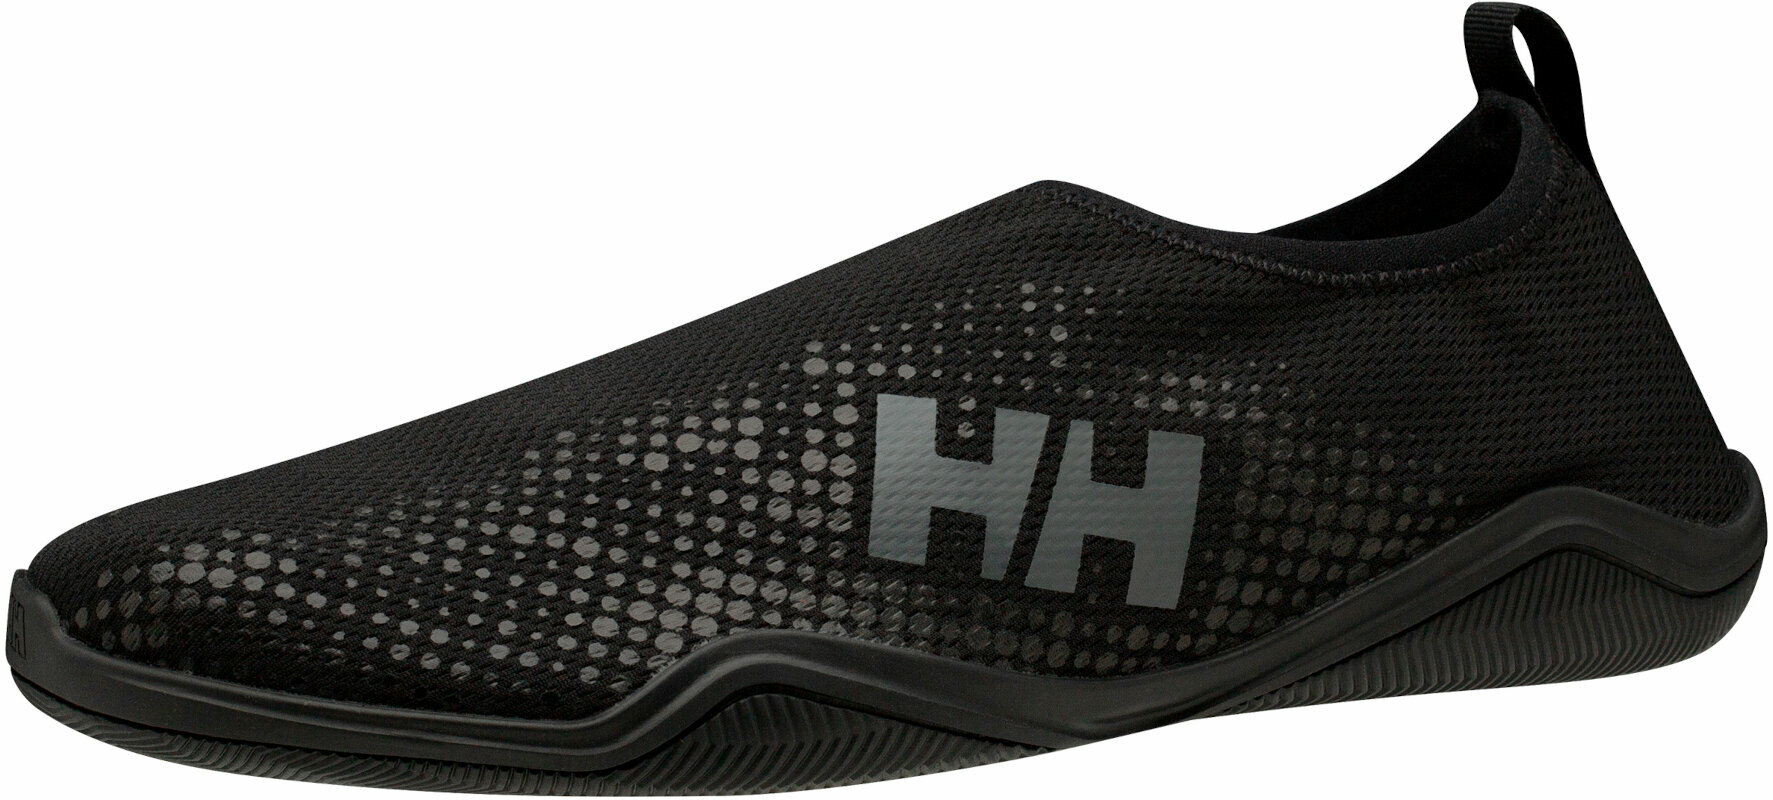 Mens Sailing Shoes Helly Hansen Men's Crest Watermoc Black/Charcoal 40,5